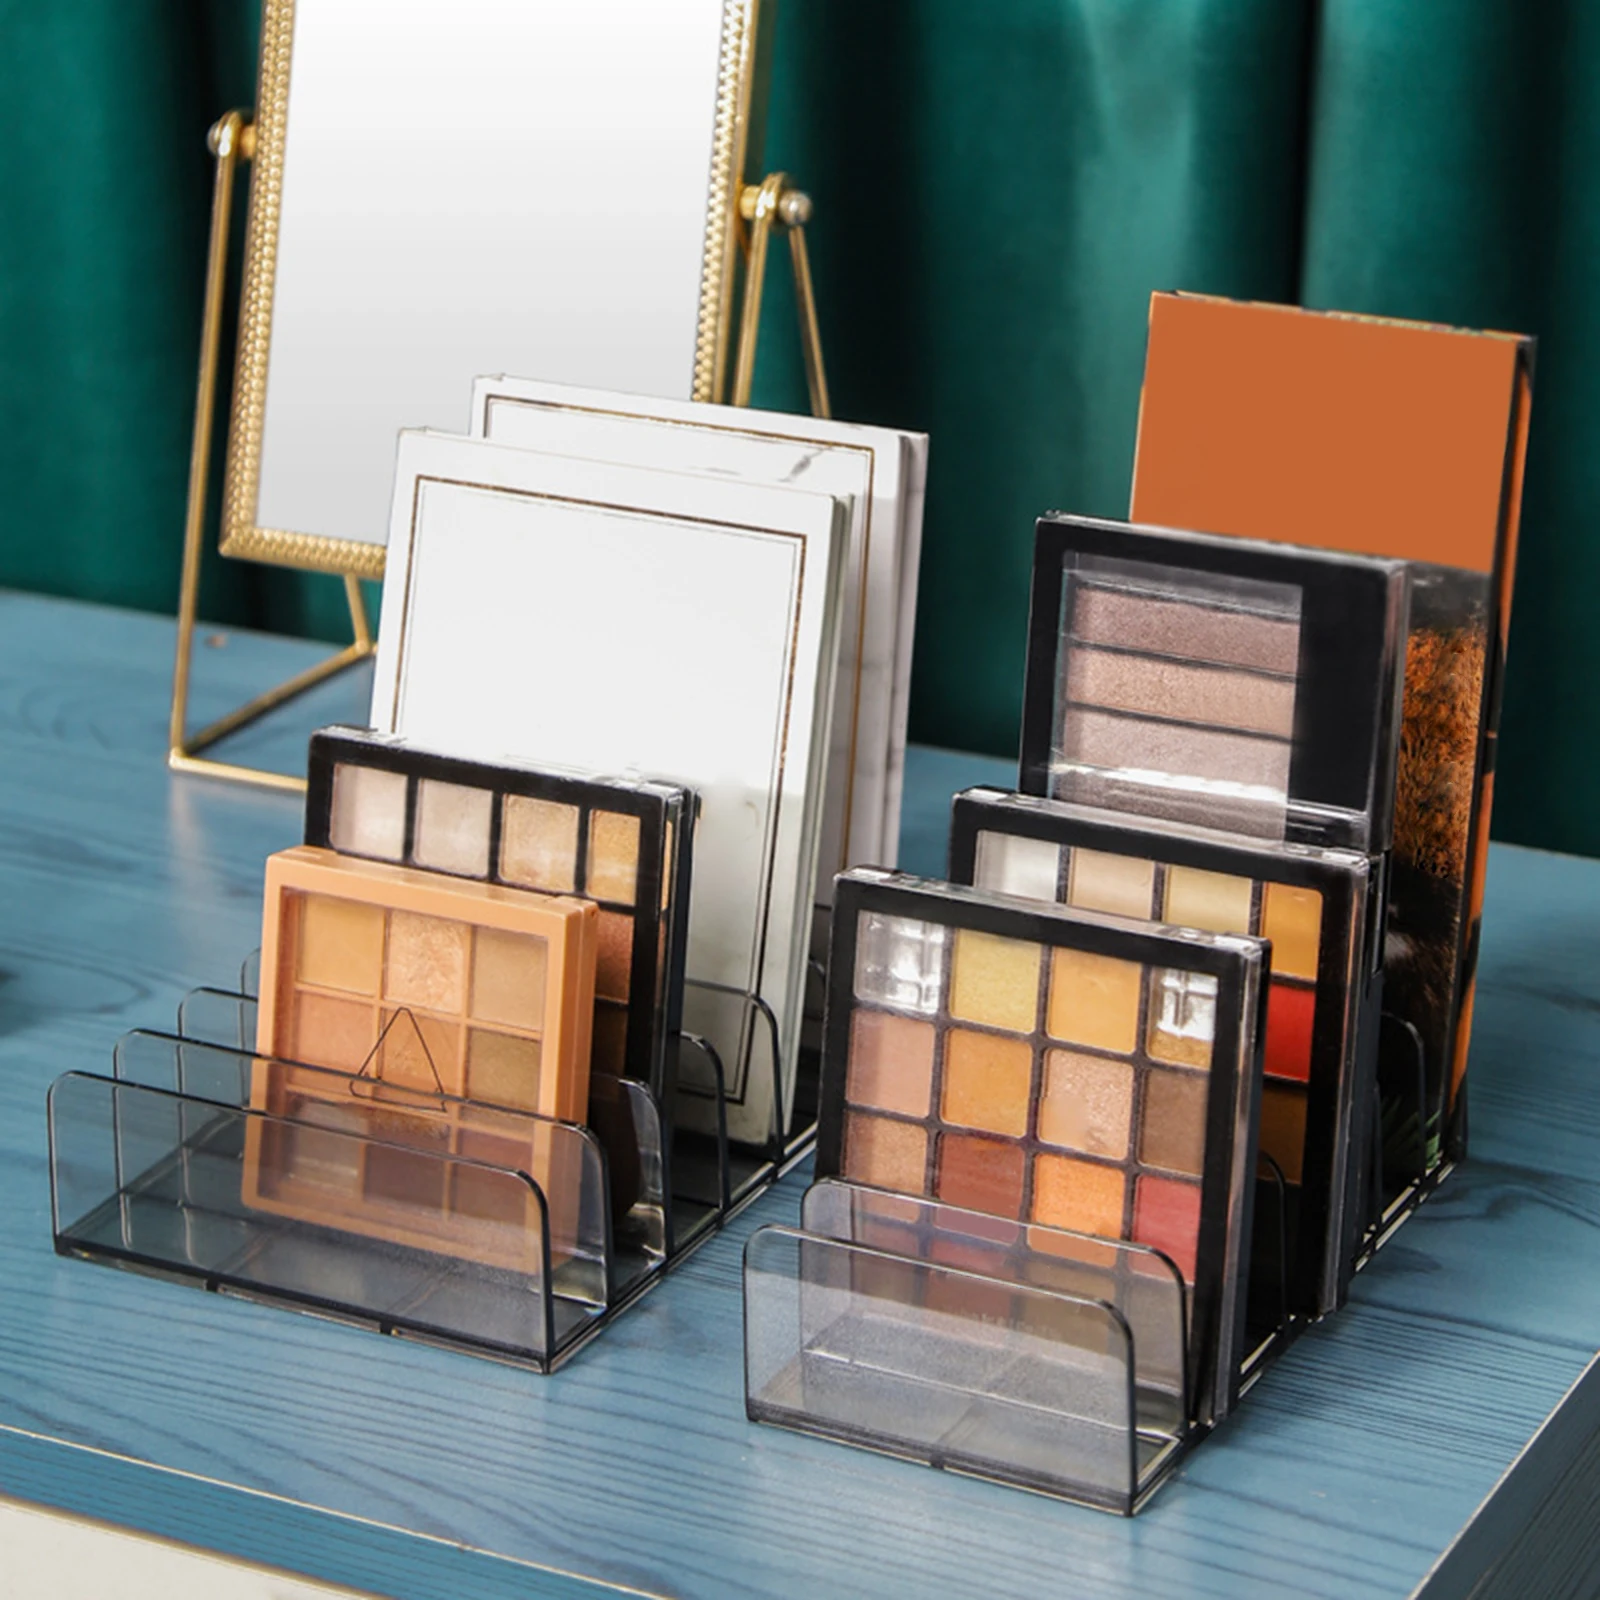 Sleek 7-Grid Makeup Organizer Organize Blush for Vanity Compact Vertical Makeup Palette Eyeshadow Palettes Blush Kit